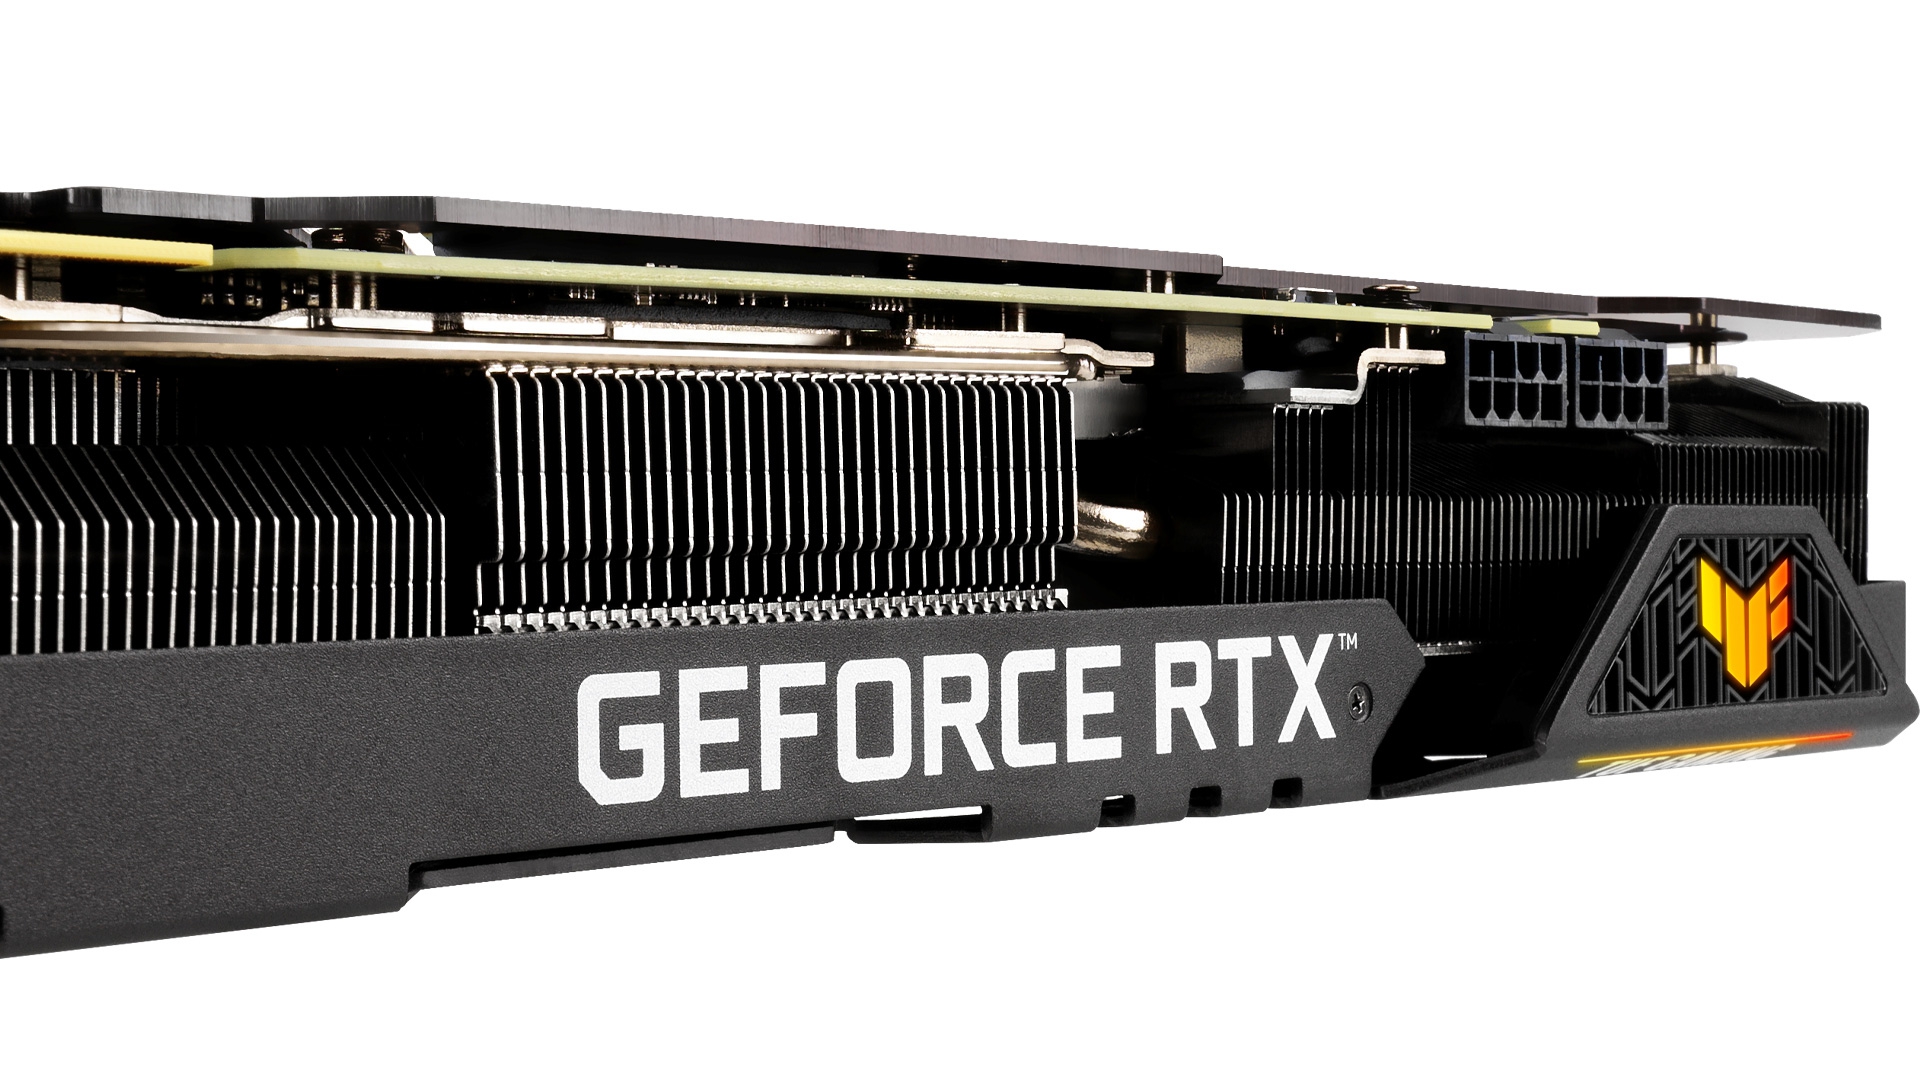 asus tuf เอซุสประกาศเปิดตัวการ์ดจอ Nvidia GeForce RTX 30ซีรี่ย์รุ่นใหม่ล่าสุด 5รุ่น ROG Strix GeForce RTX 3090 , ASUS TUF Gaming GeForce RTX 3090 , GeForce RTX 3080 , ROG Strix GeForce RTX 3070 และ ASUS Dual GeForce RTX 3070 อย่างเป็นทางการ